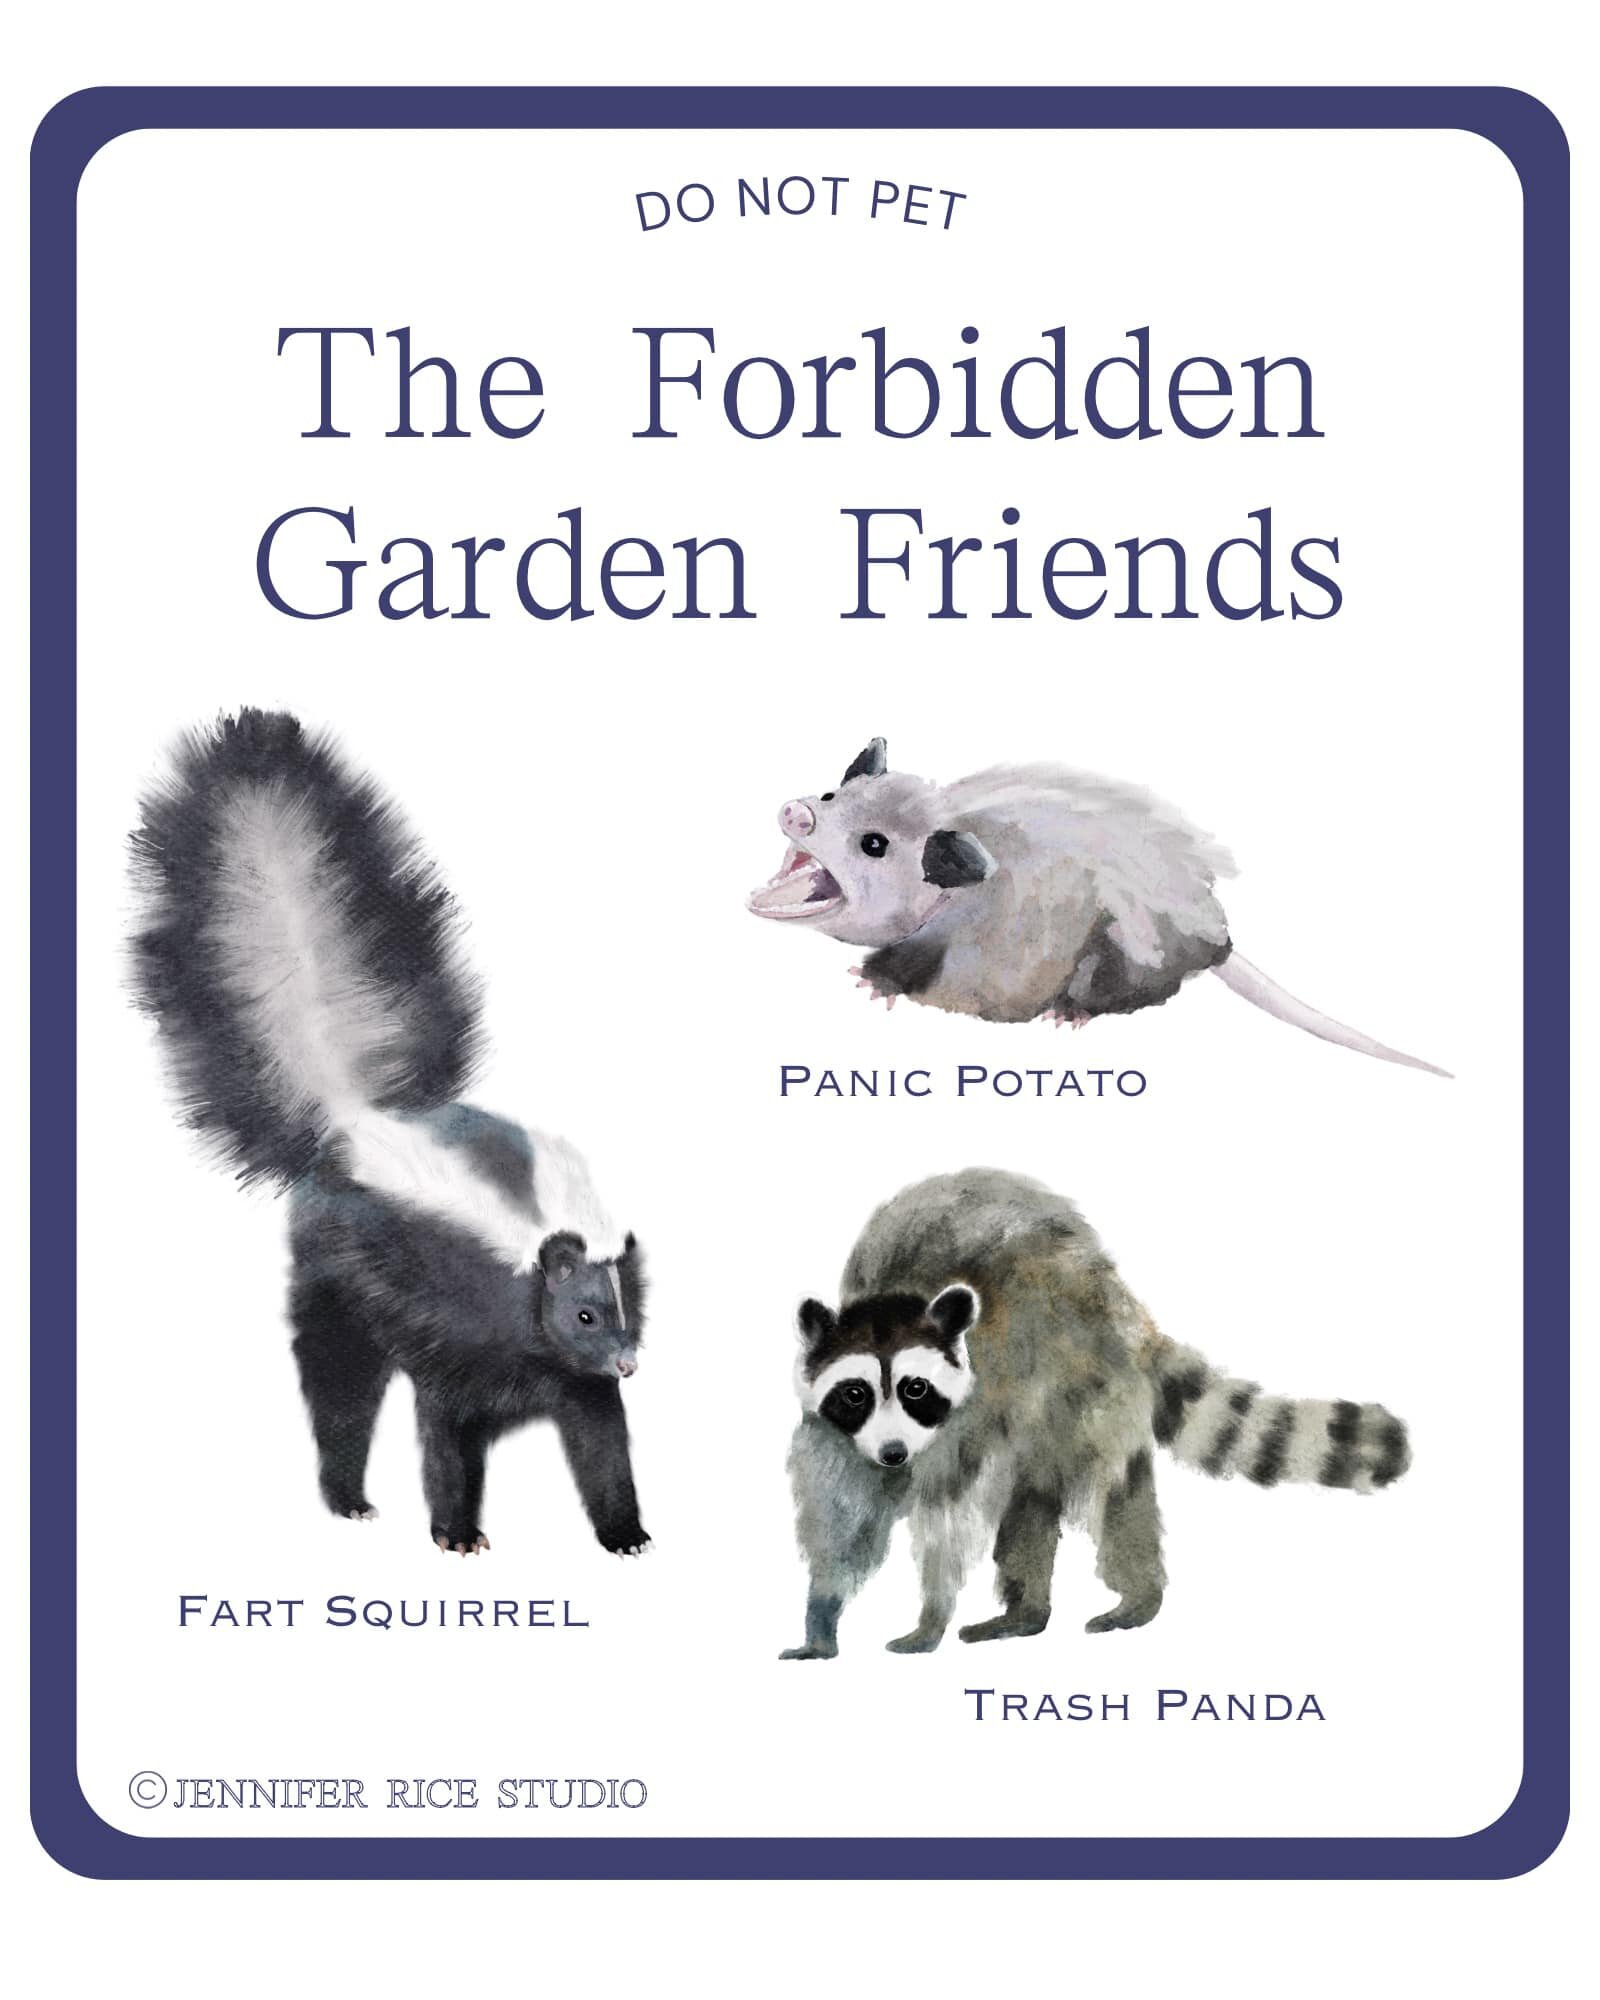 These friends need a little extra space 😂 #possums #opossum #skunk #raccoon #trashpanda #gardenfriends